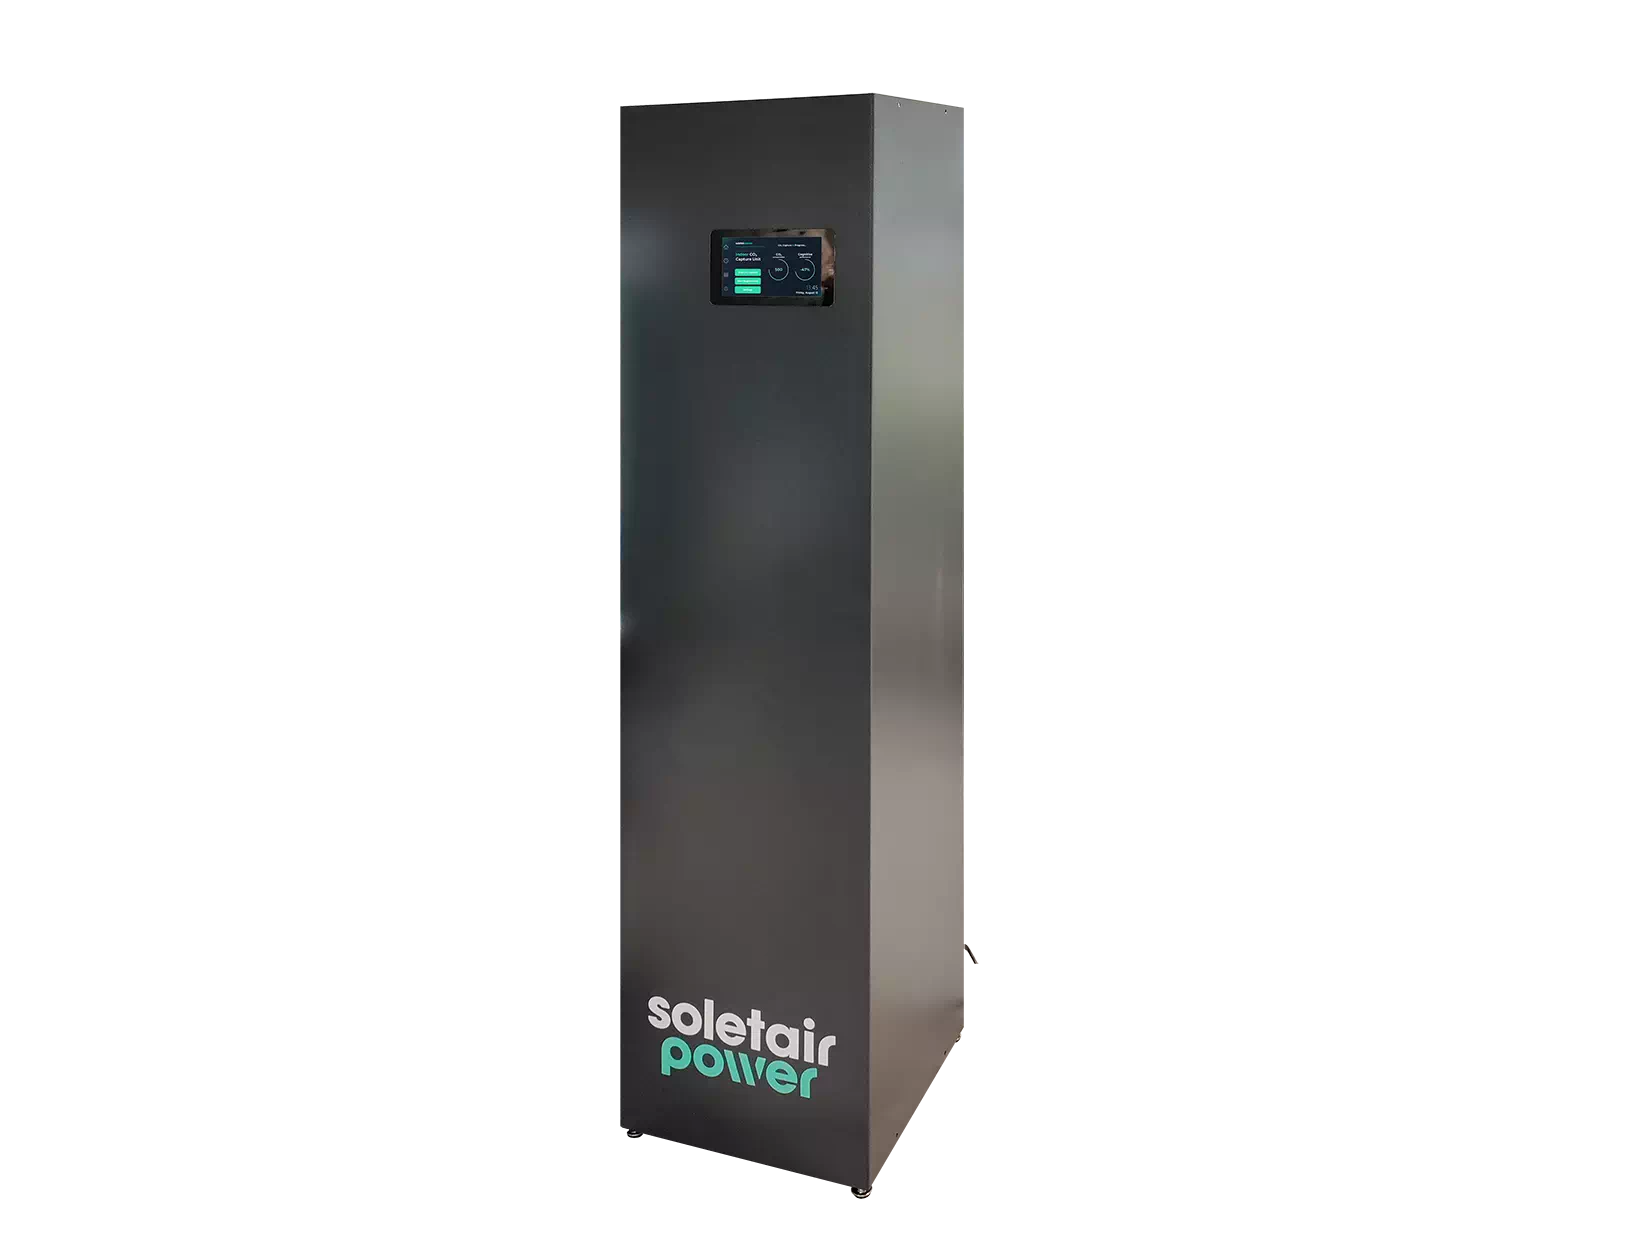 Indoor CO2 filtering Air Purifier Unit Soletair Power landscape